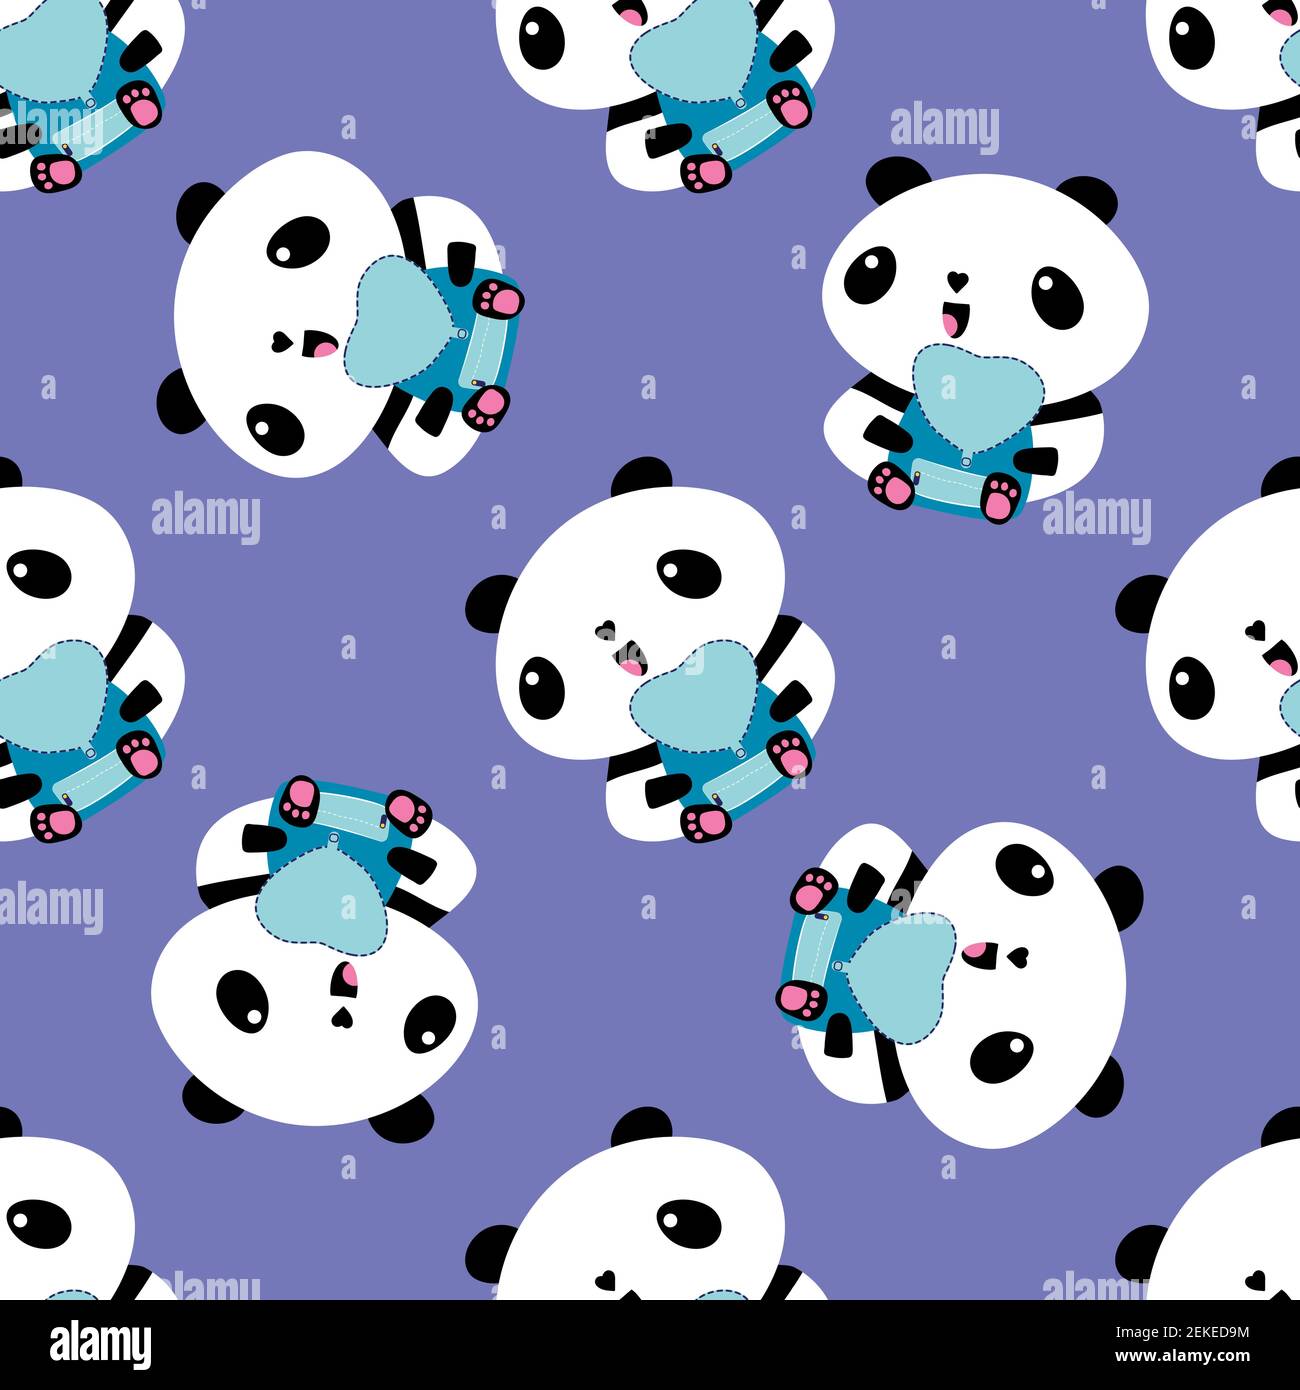 Cute Kawaii vector panda seamless pattern background. Sitting cartoon bears holding blue backpacks and school bags on purple backdrop. Fun character Stock Vector